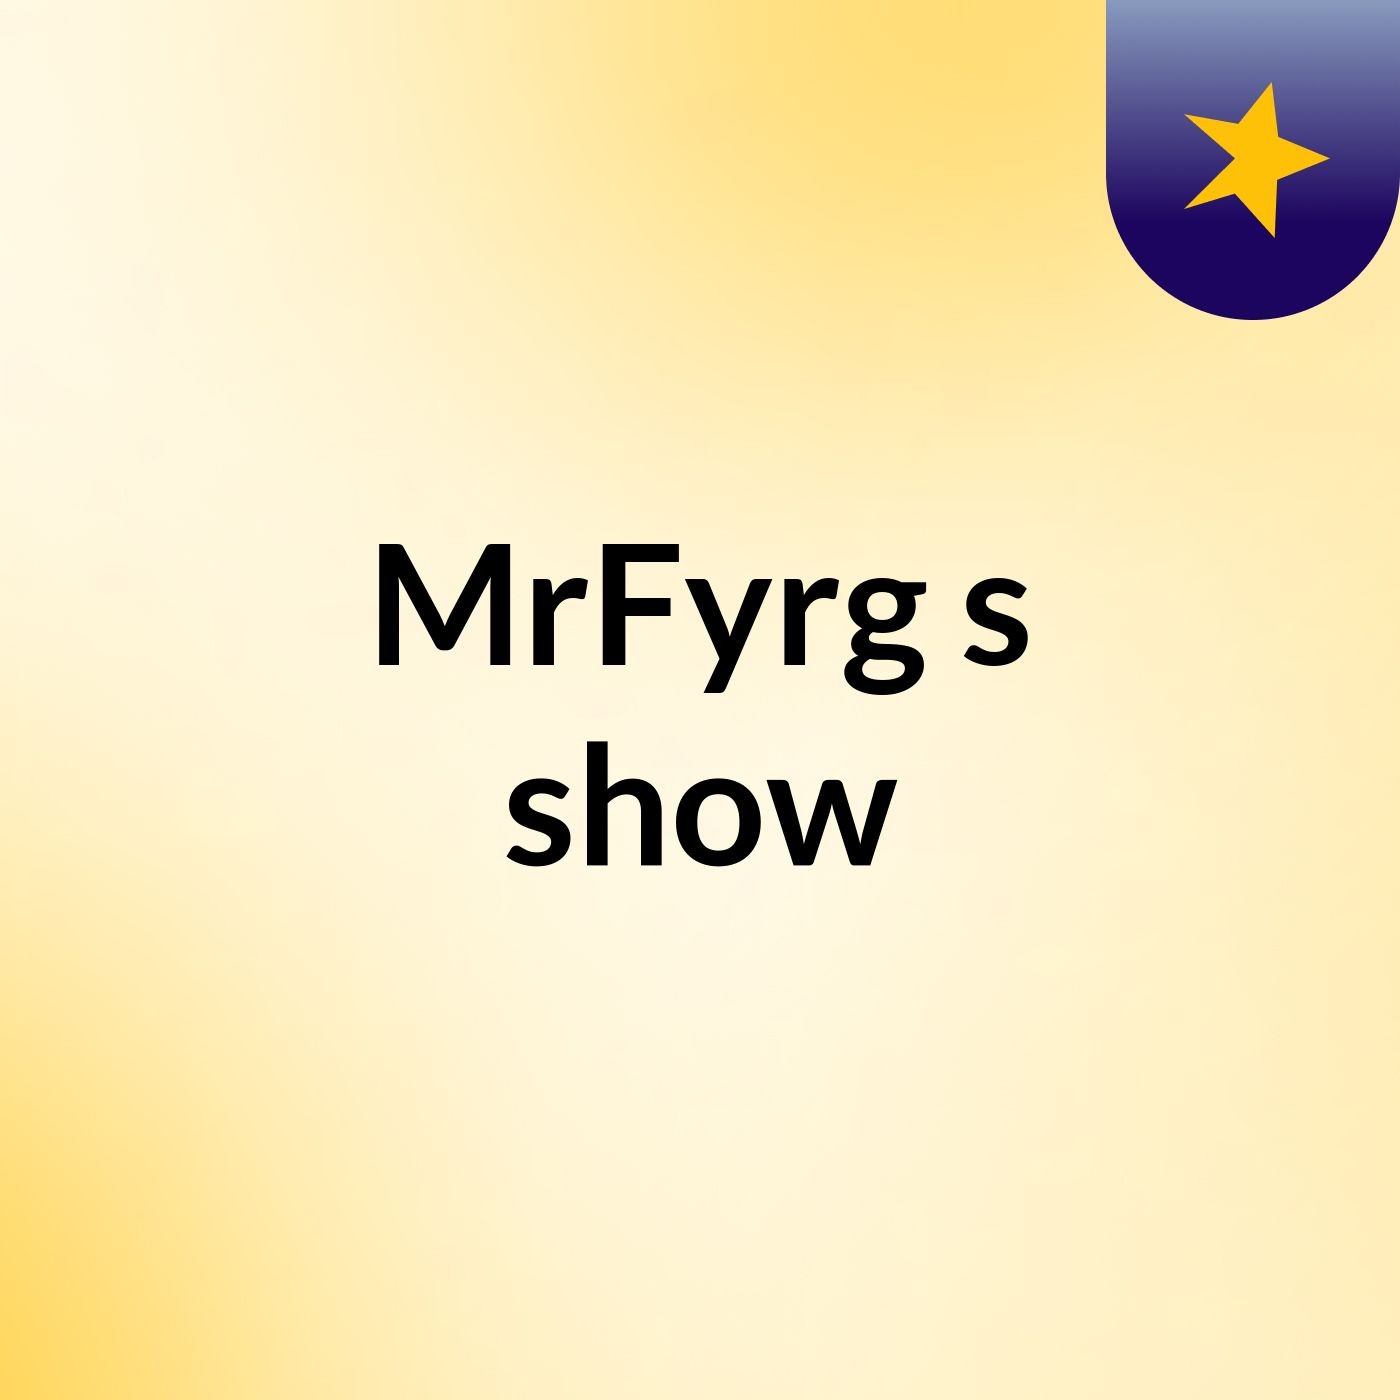 MrFyrg's show